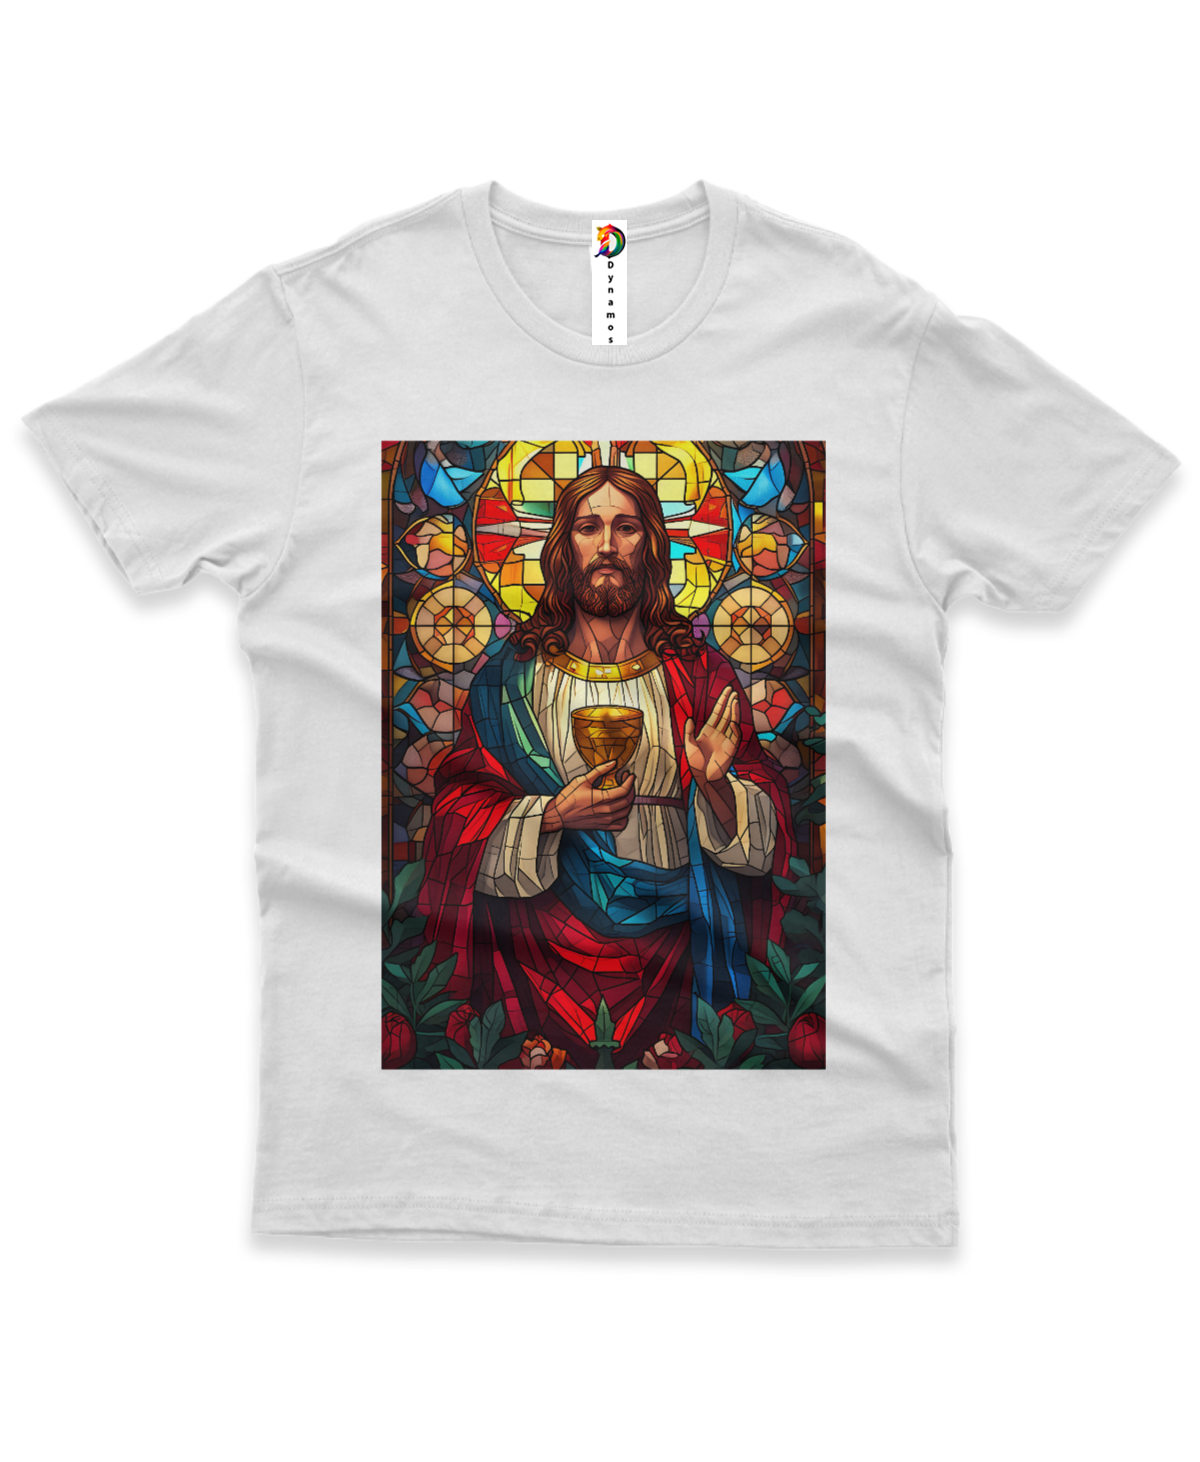 Camiseta Viviane Masc - Jesus - Algodão Pima